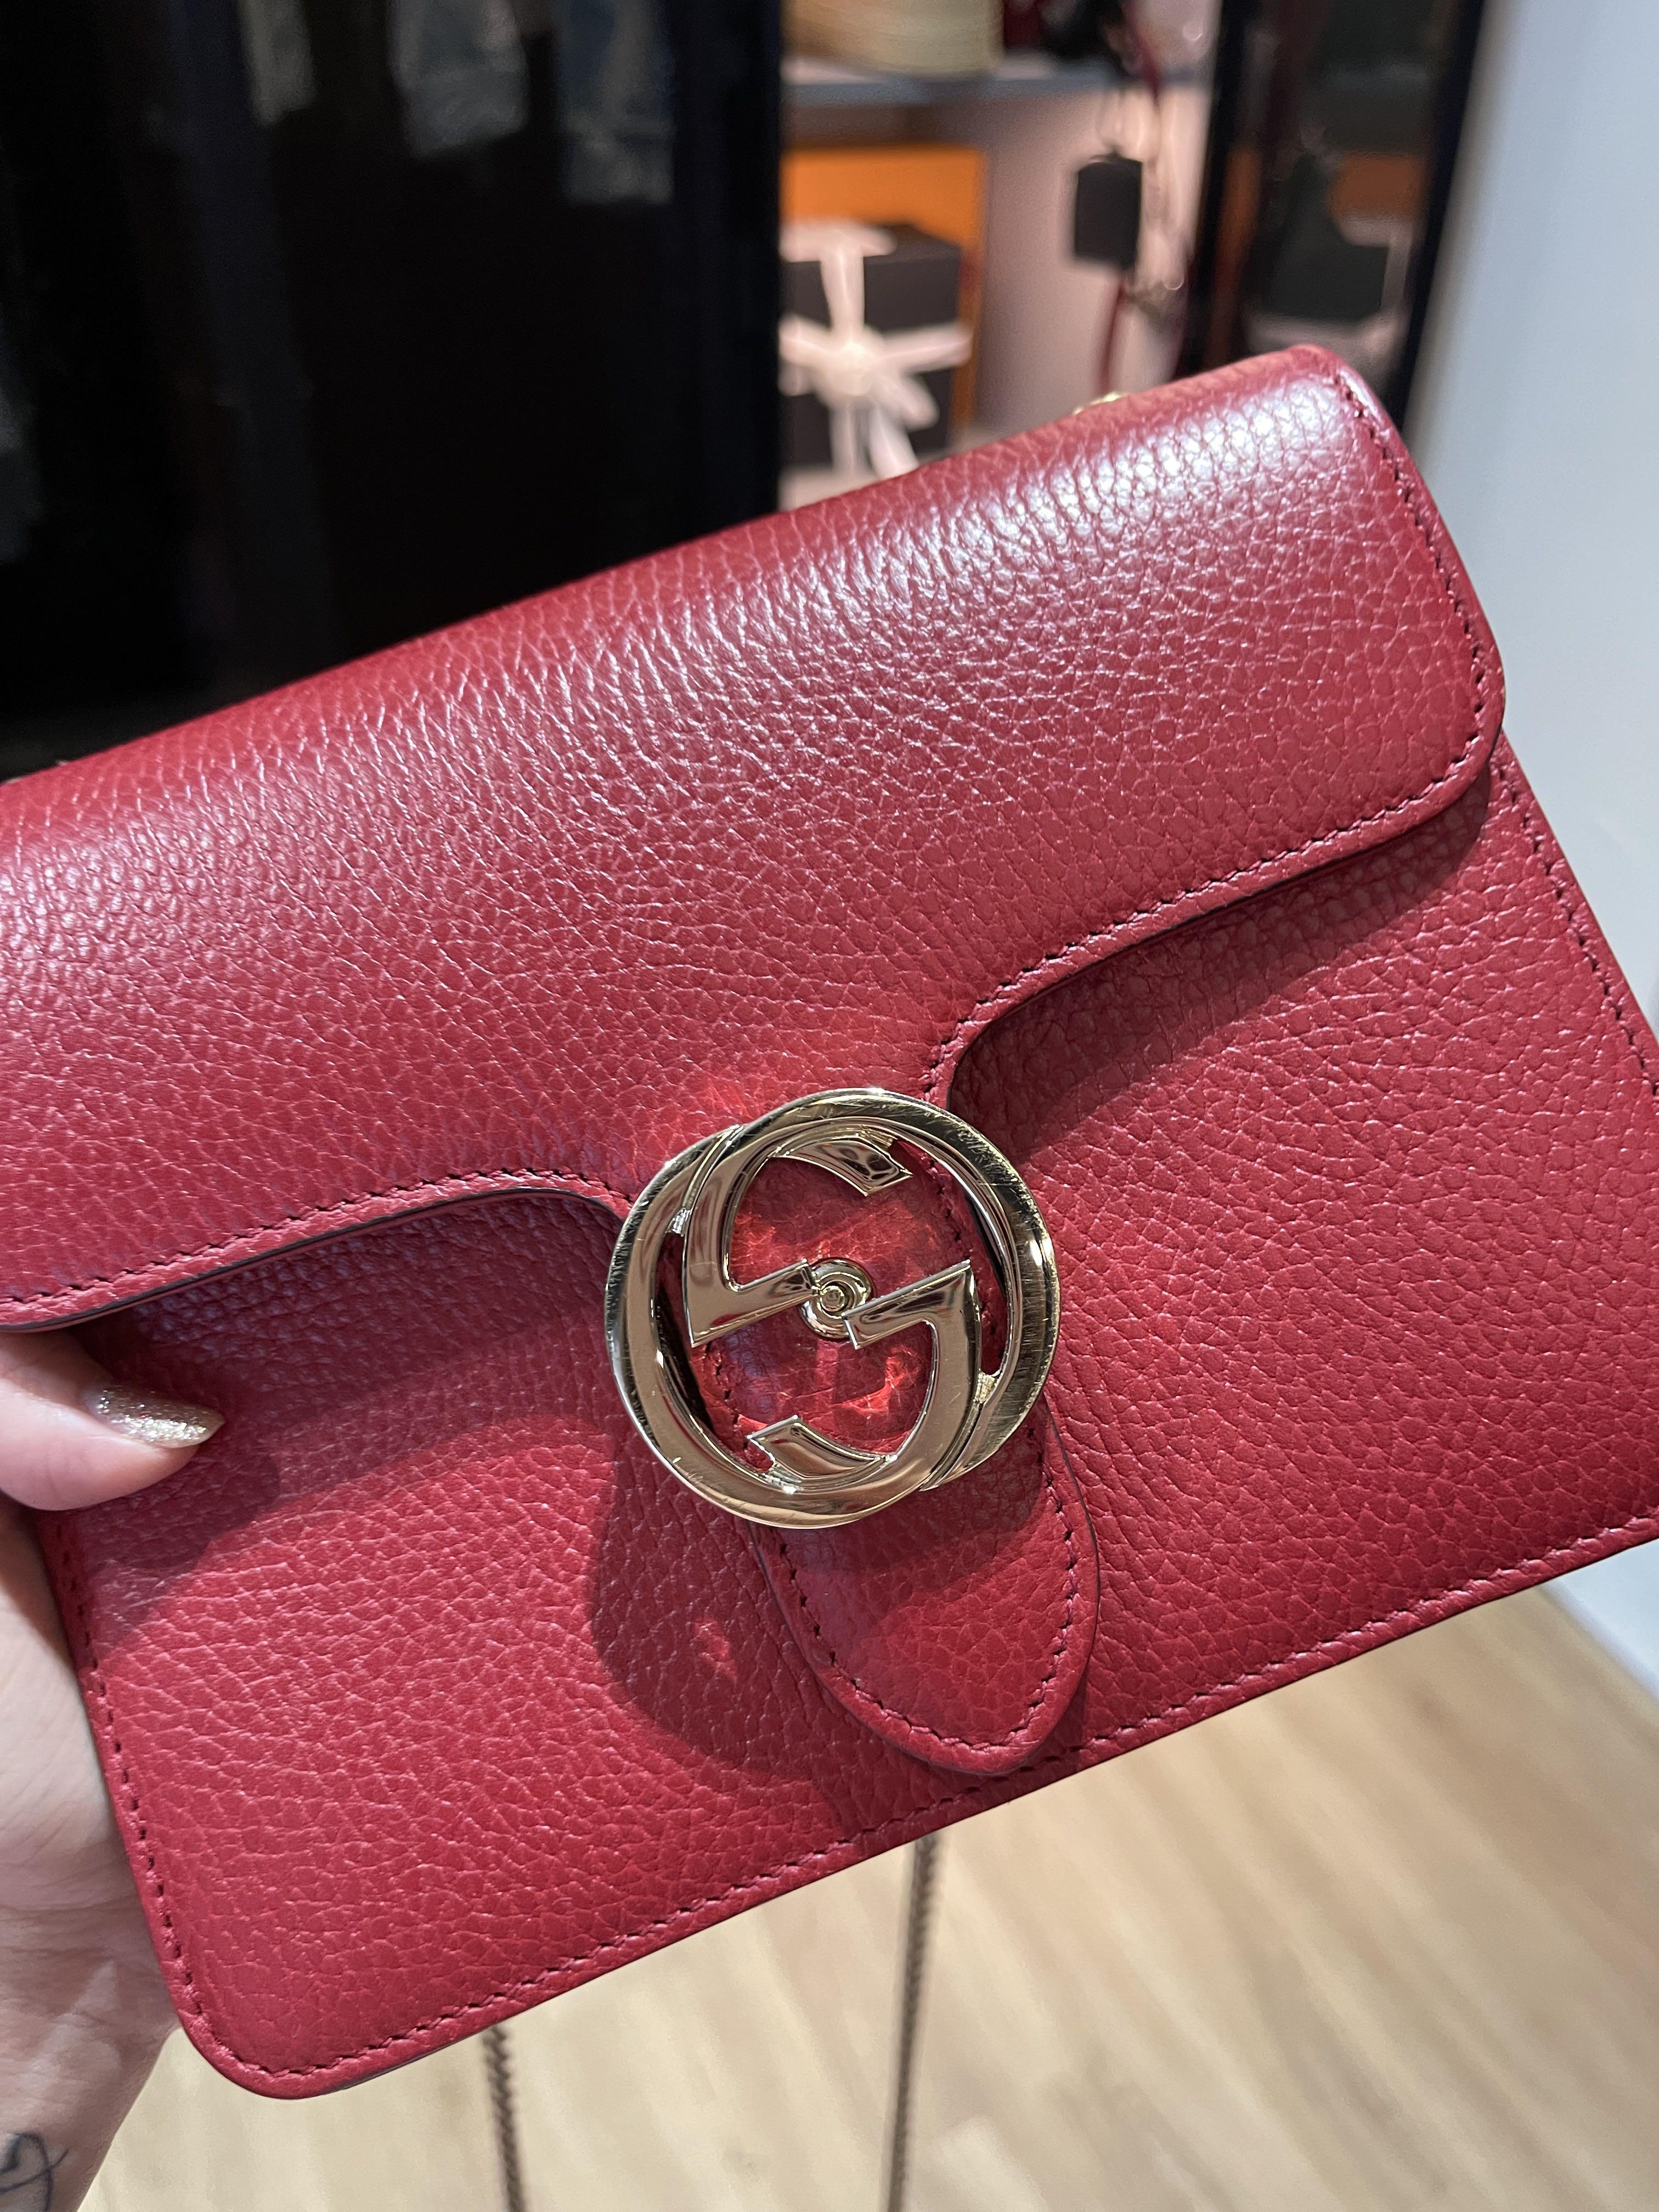 Authentic Gucci Crossbody Purse, Interlocking G Chain Bag - Calfskin Leather